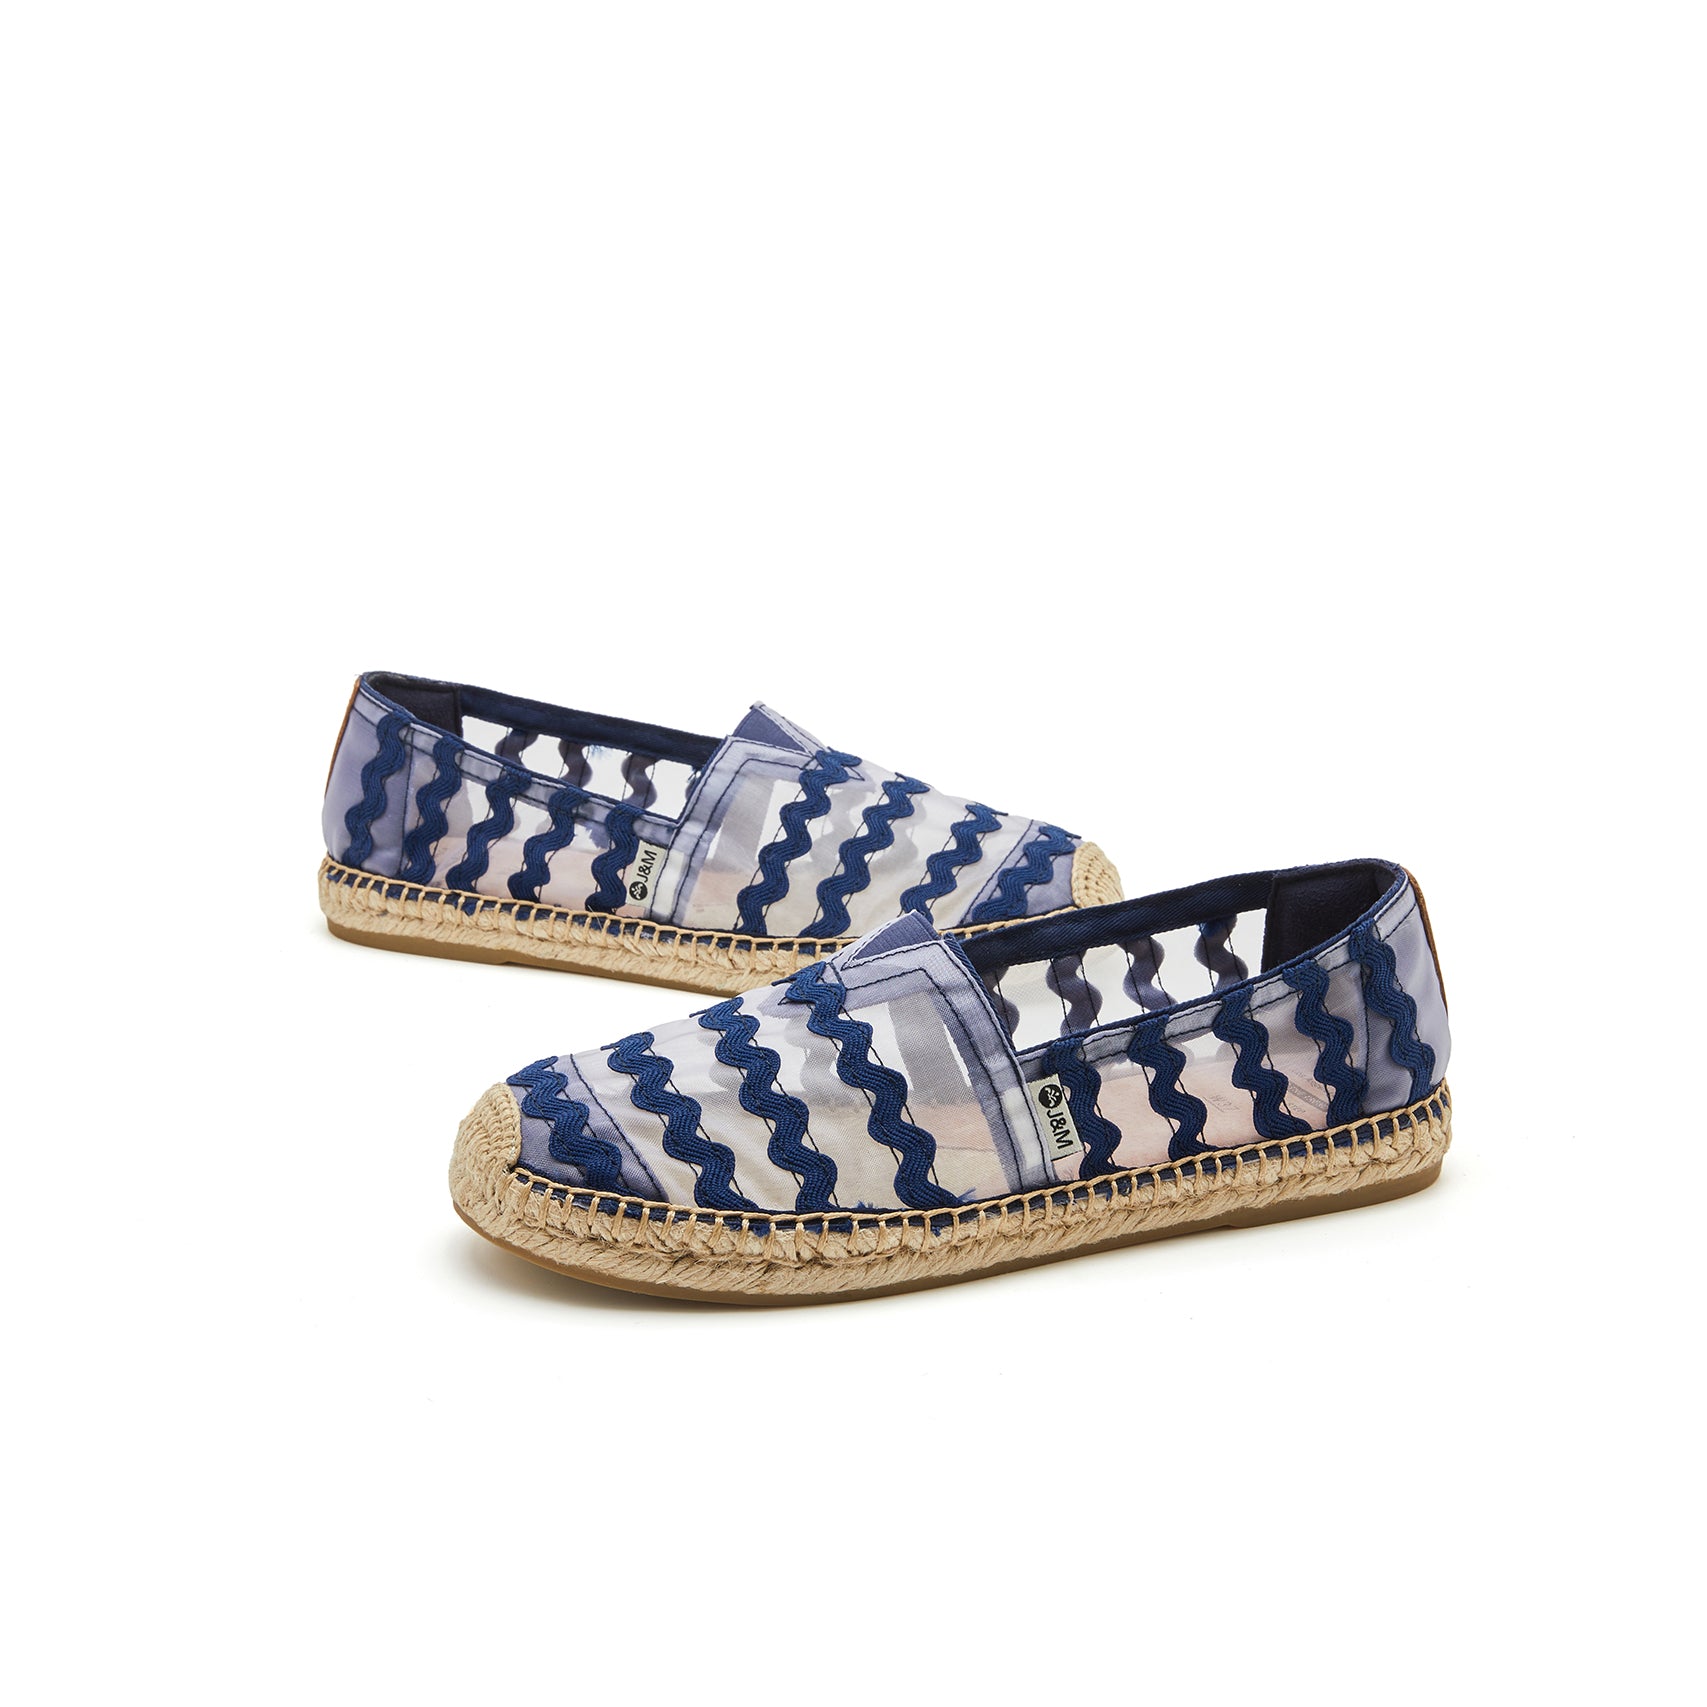 JOY&MARIO Handmade Women’s Slip-On Espadrille Mesh Loafers Flats in Blue-05320W